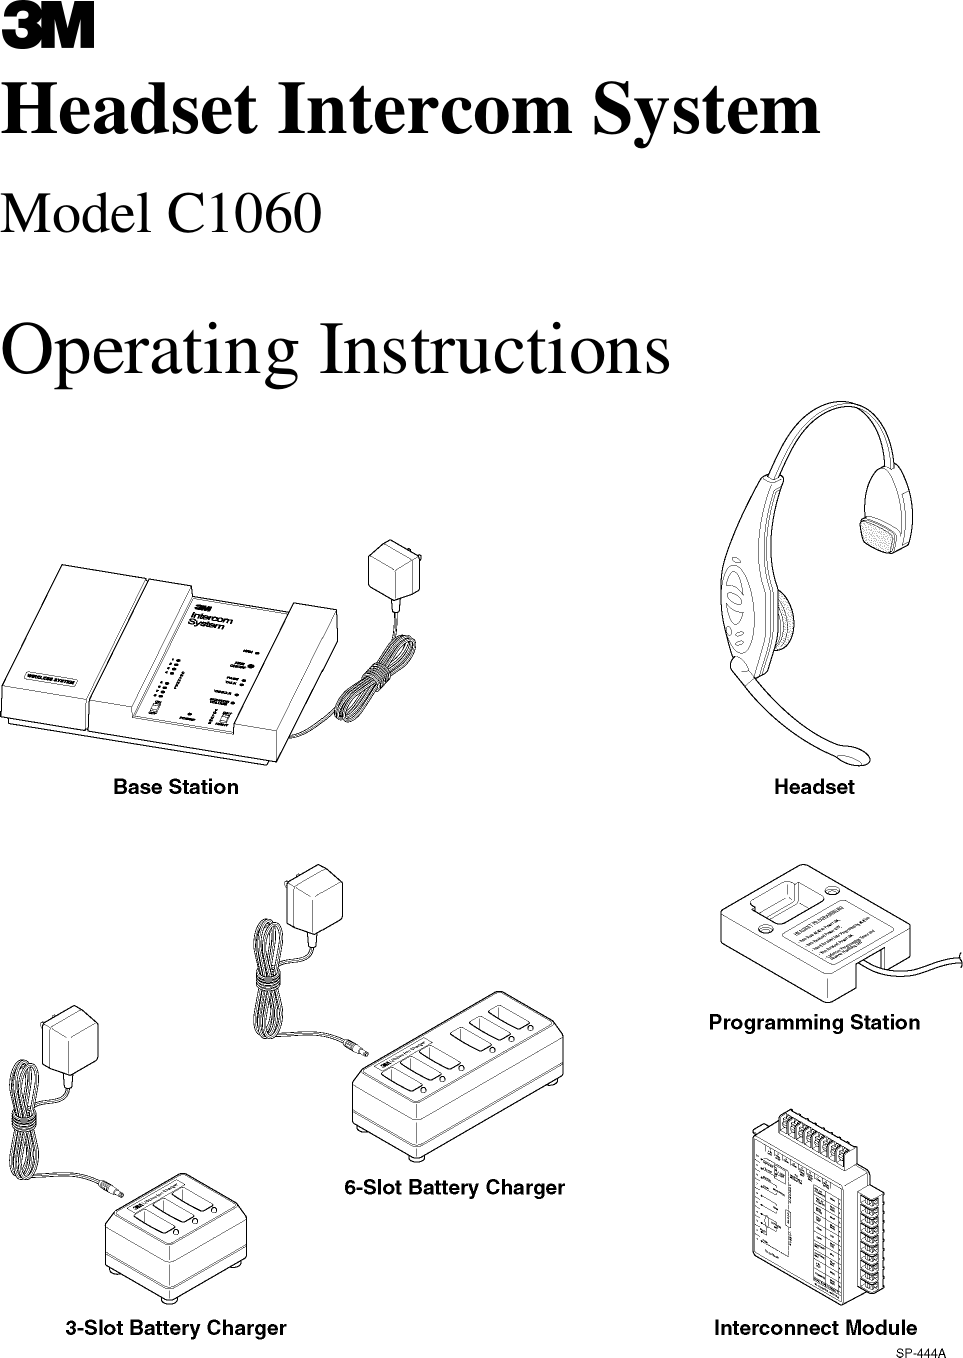 Headset Intercom SystemModel C1060Operating Instructions